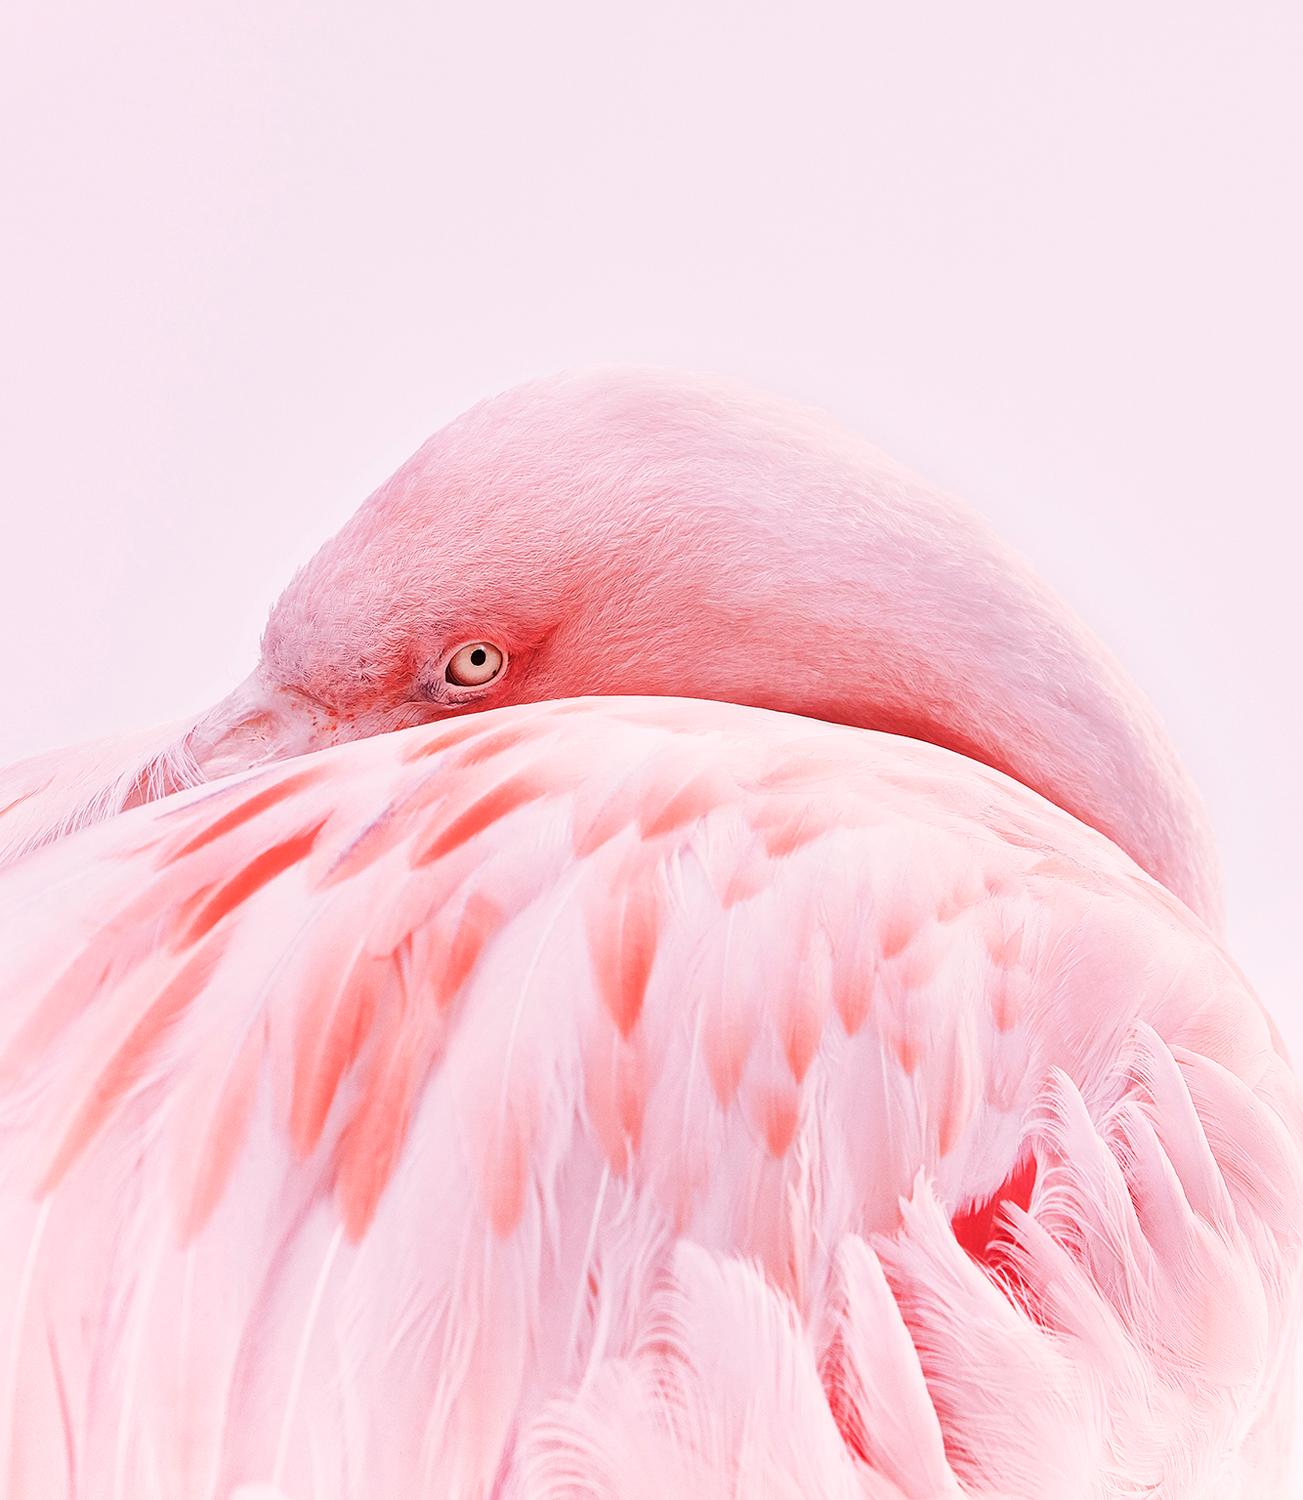 Flamingo No. 1 - Pink Color Photograph by Chris Gordaneer